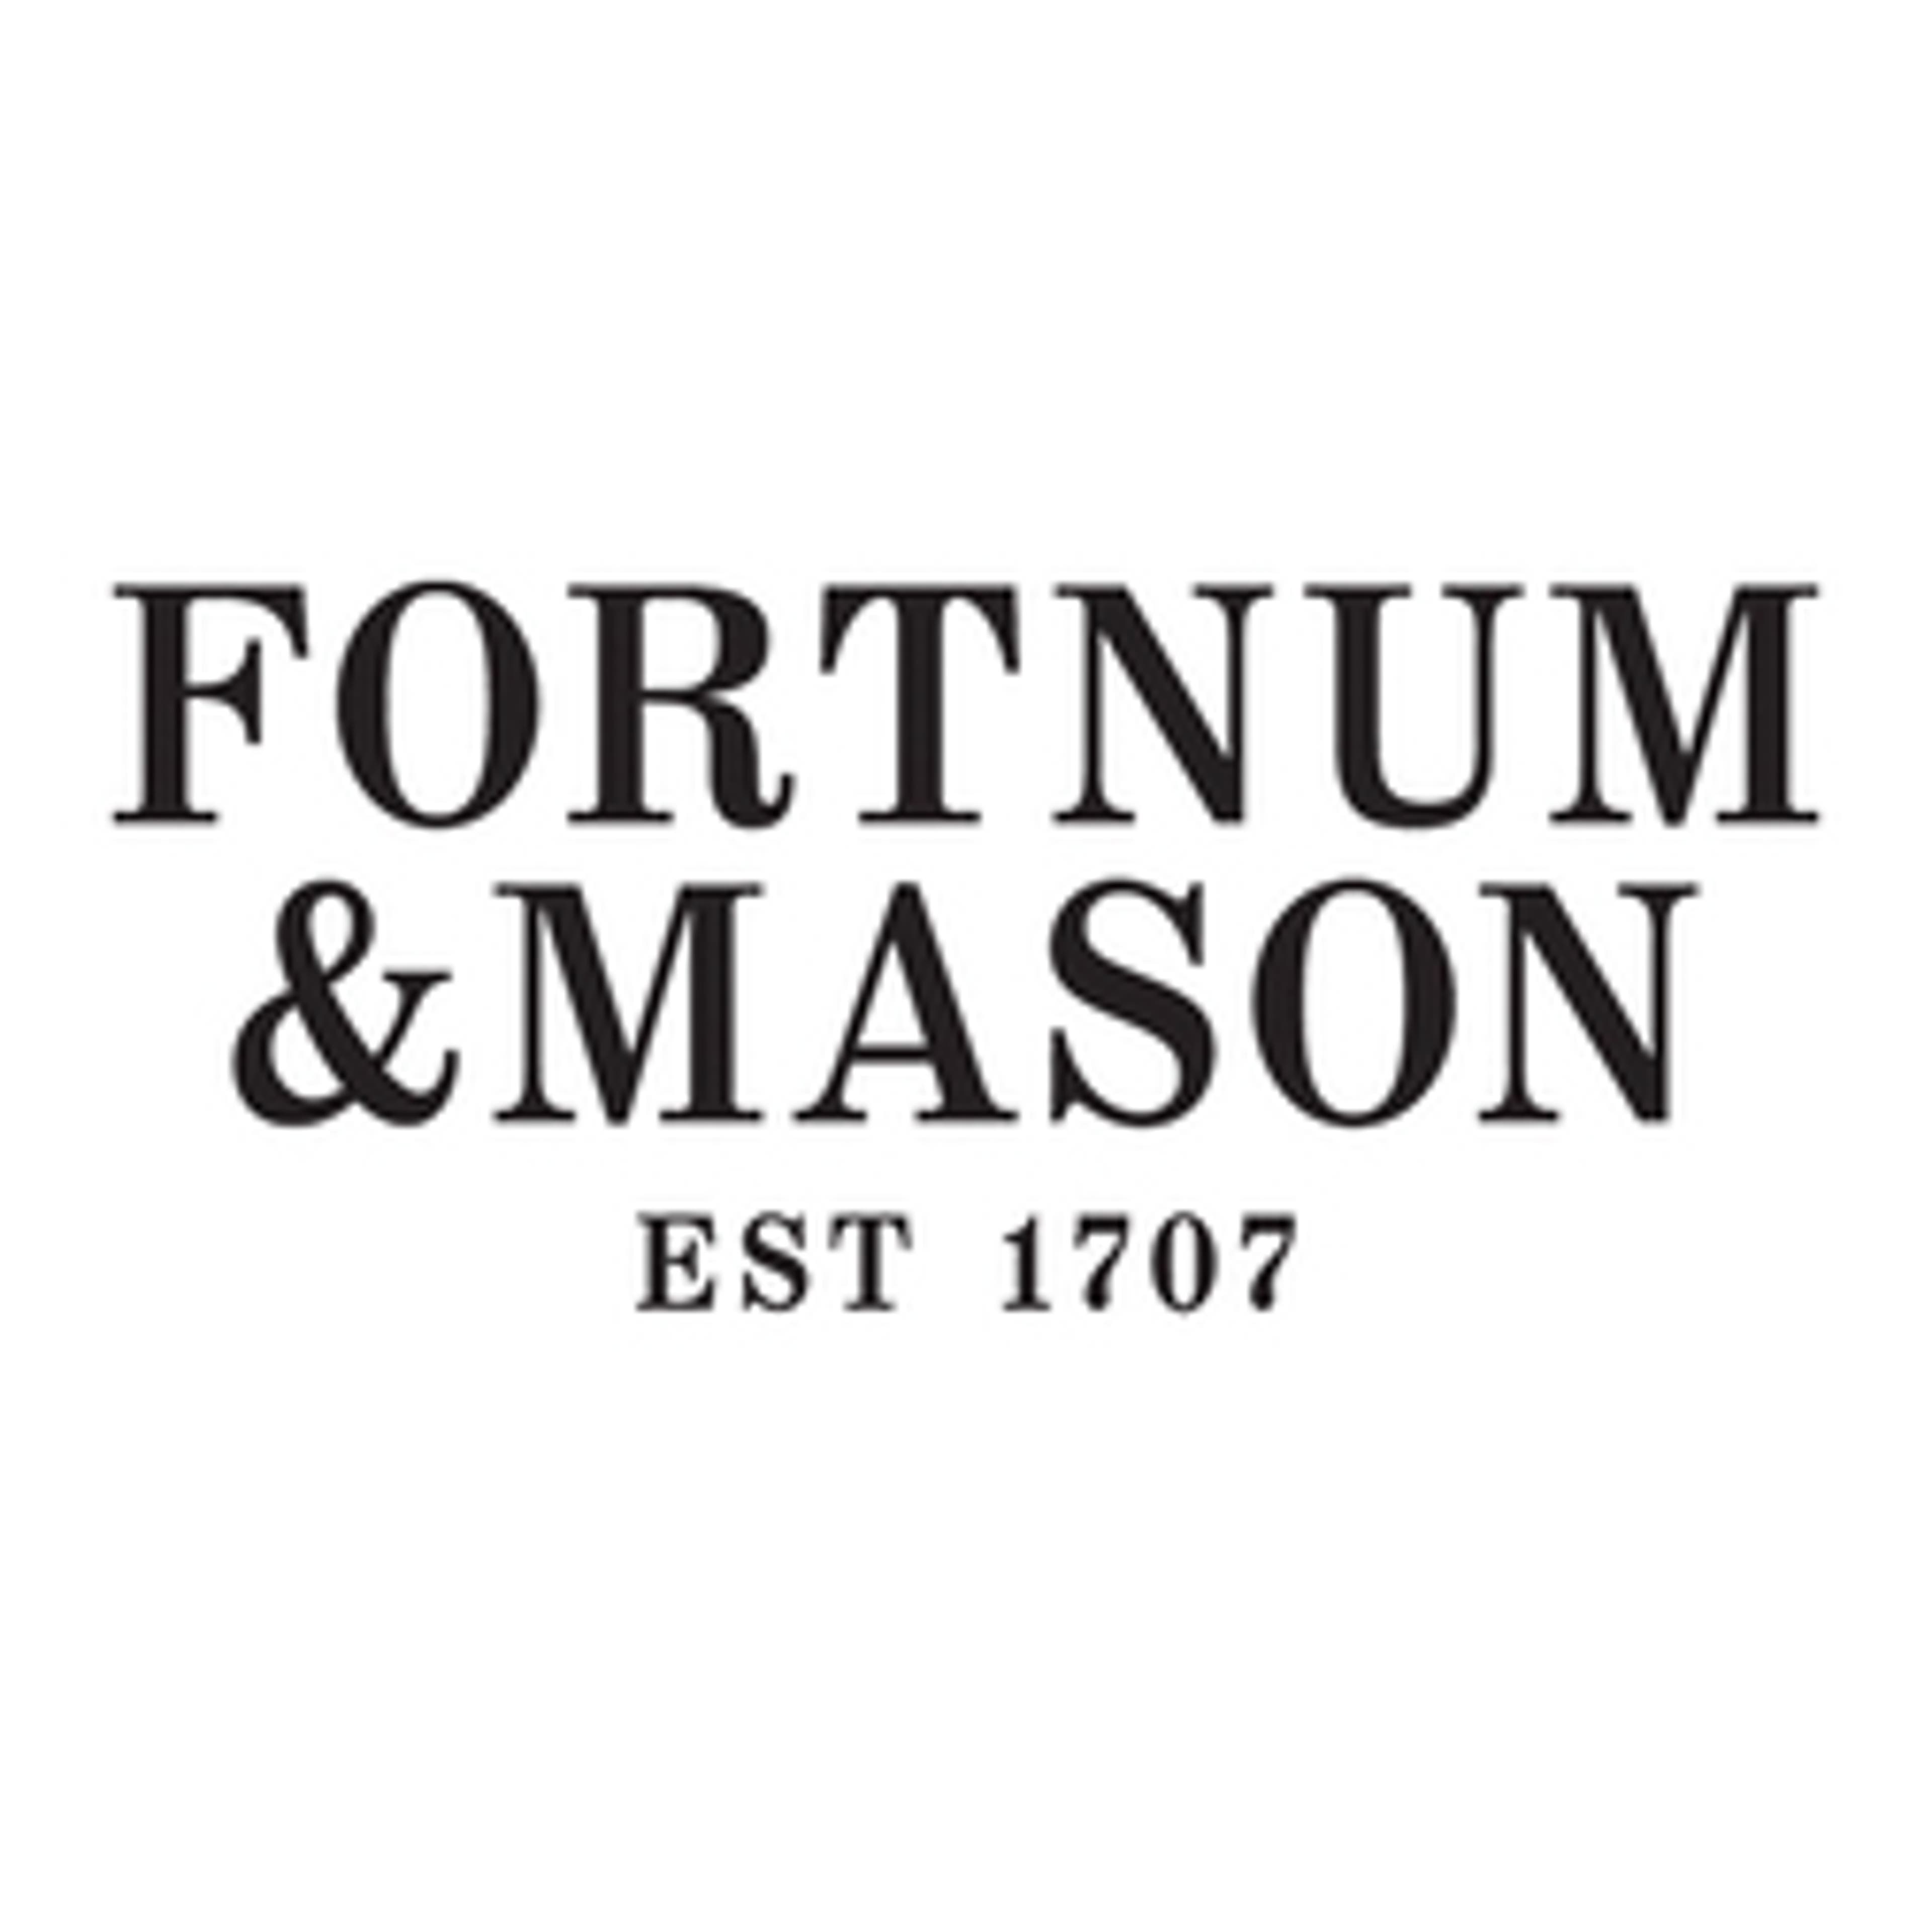  Fortnum & Mason 